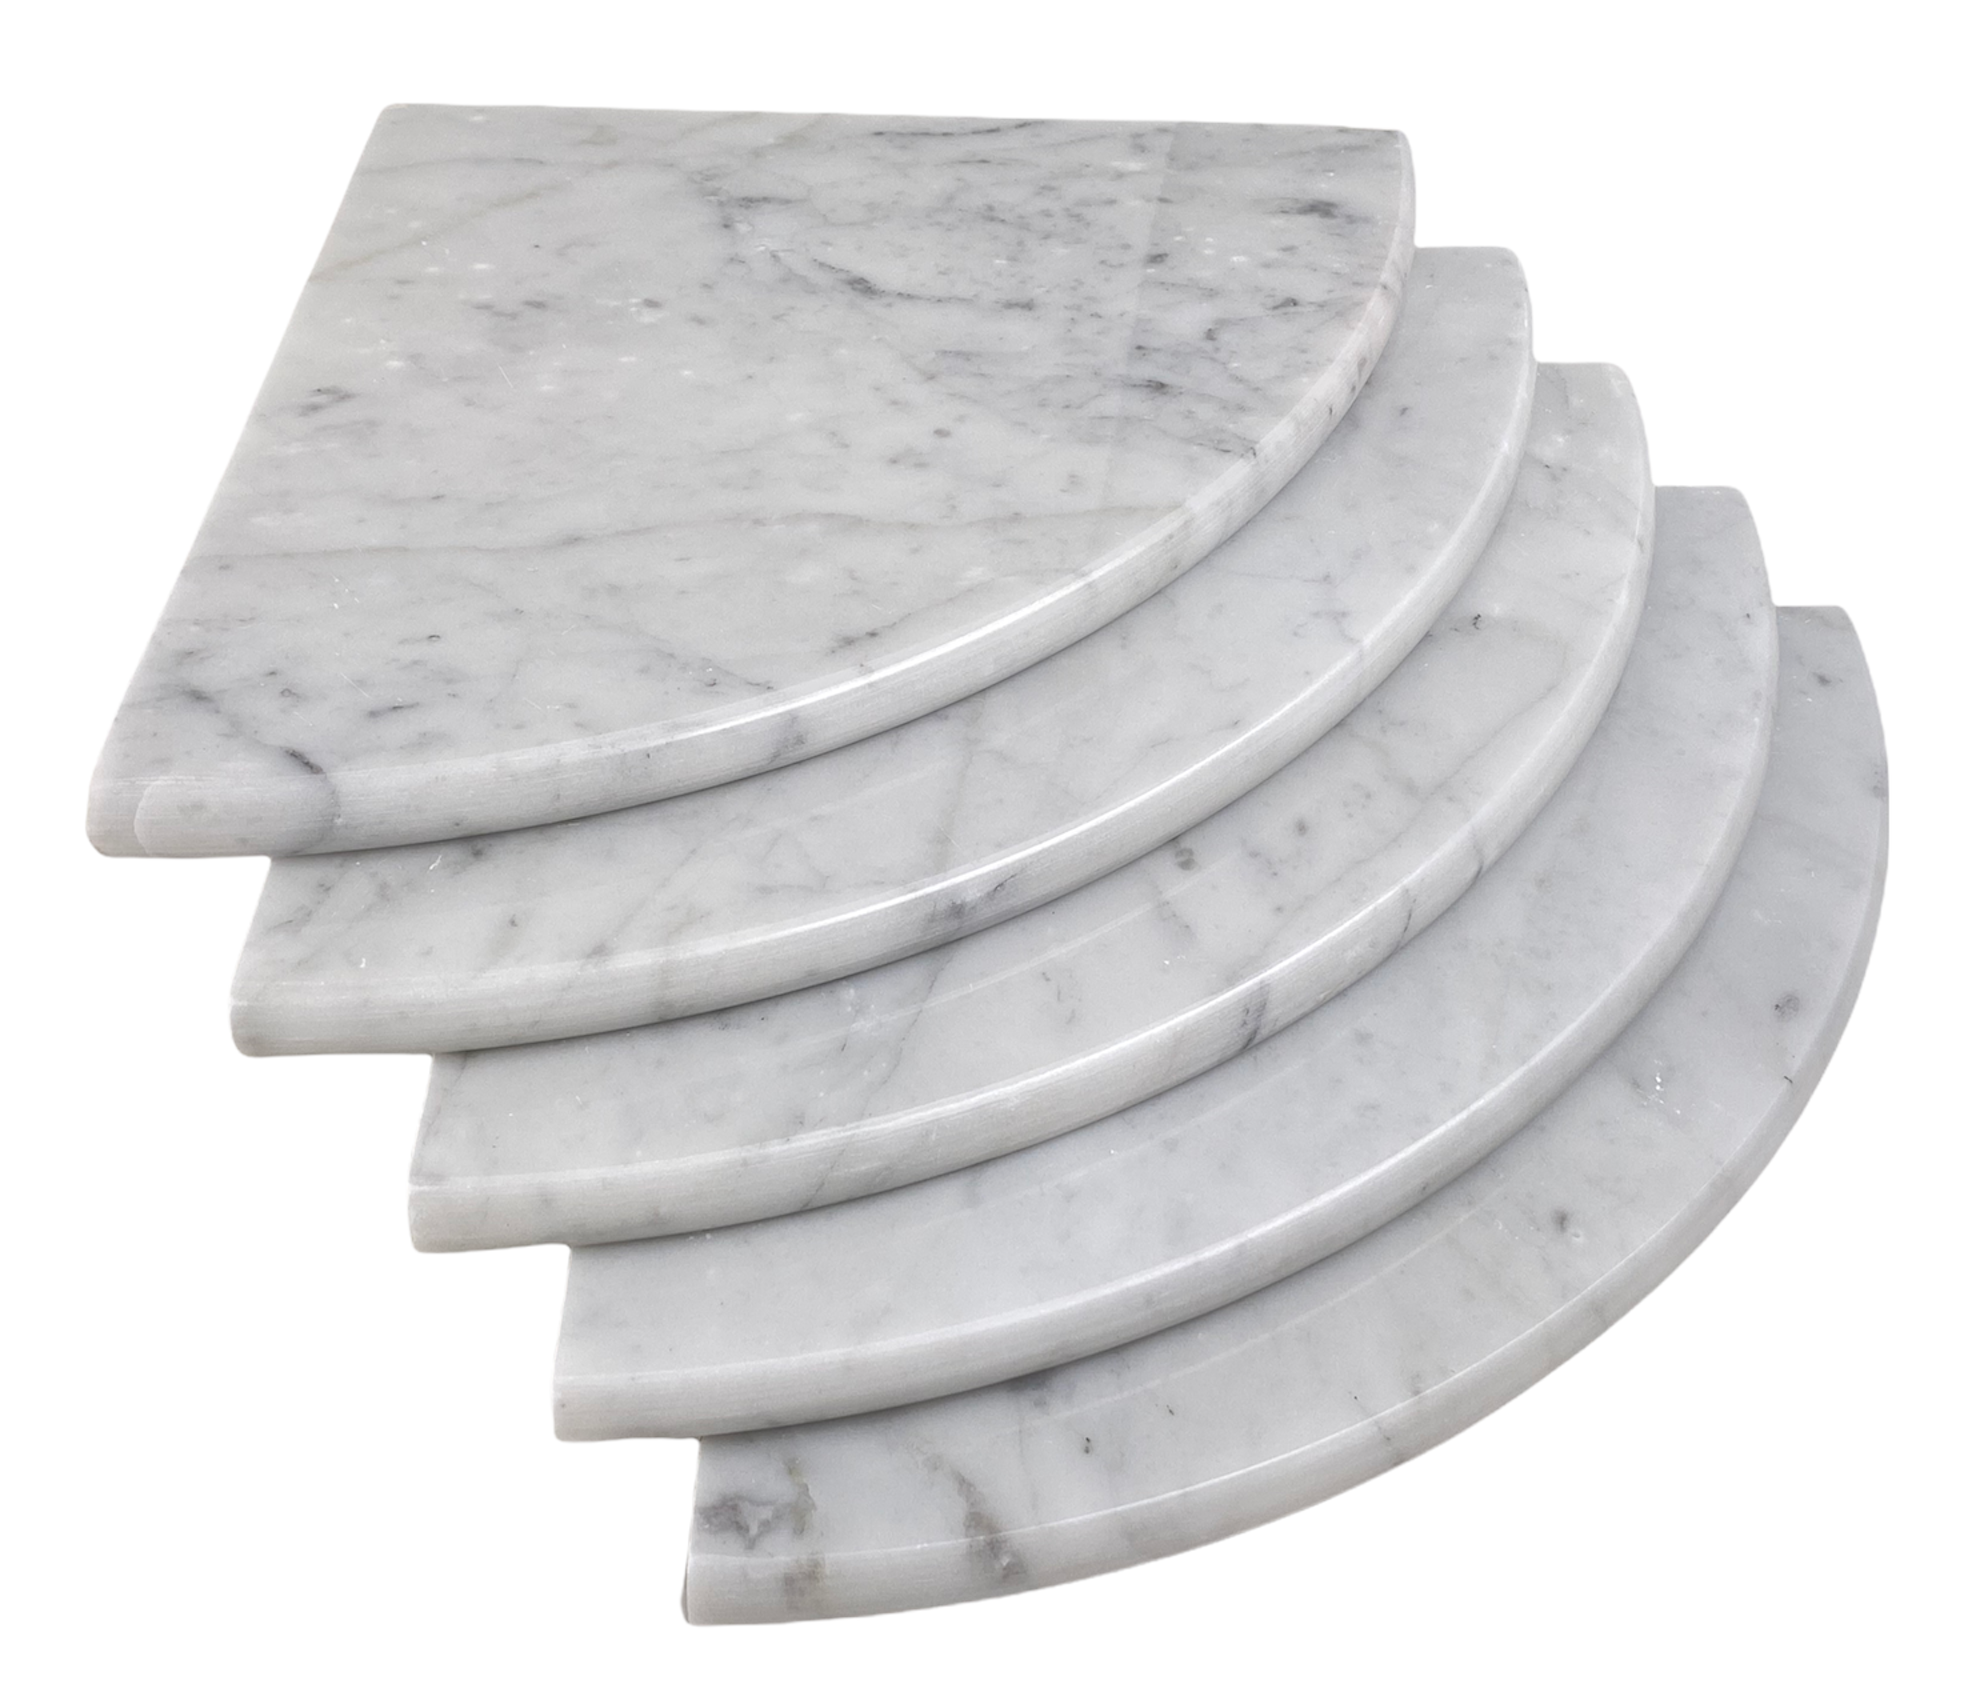 Tenedos 9x9 Round Edge Bianco Carrara Premium Corner Bath Shower Shelf Stone Piece Both Sides Polished (5 Pieces)